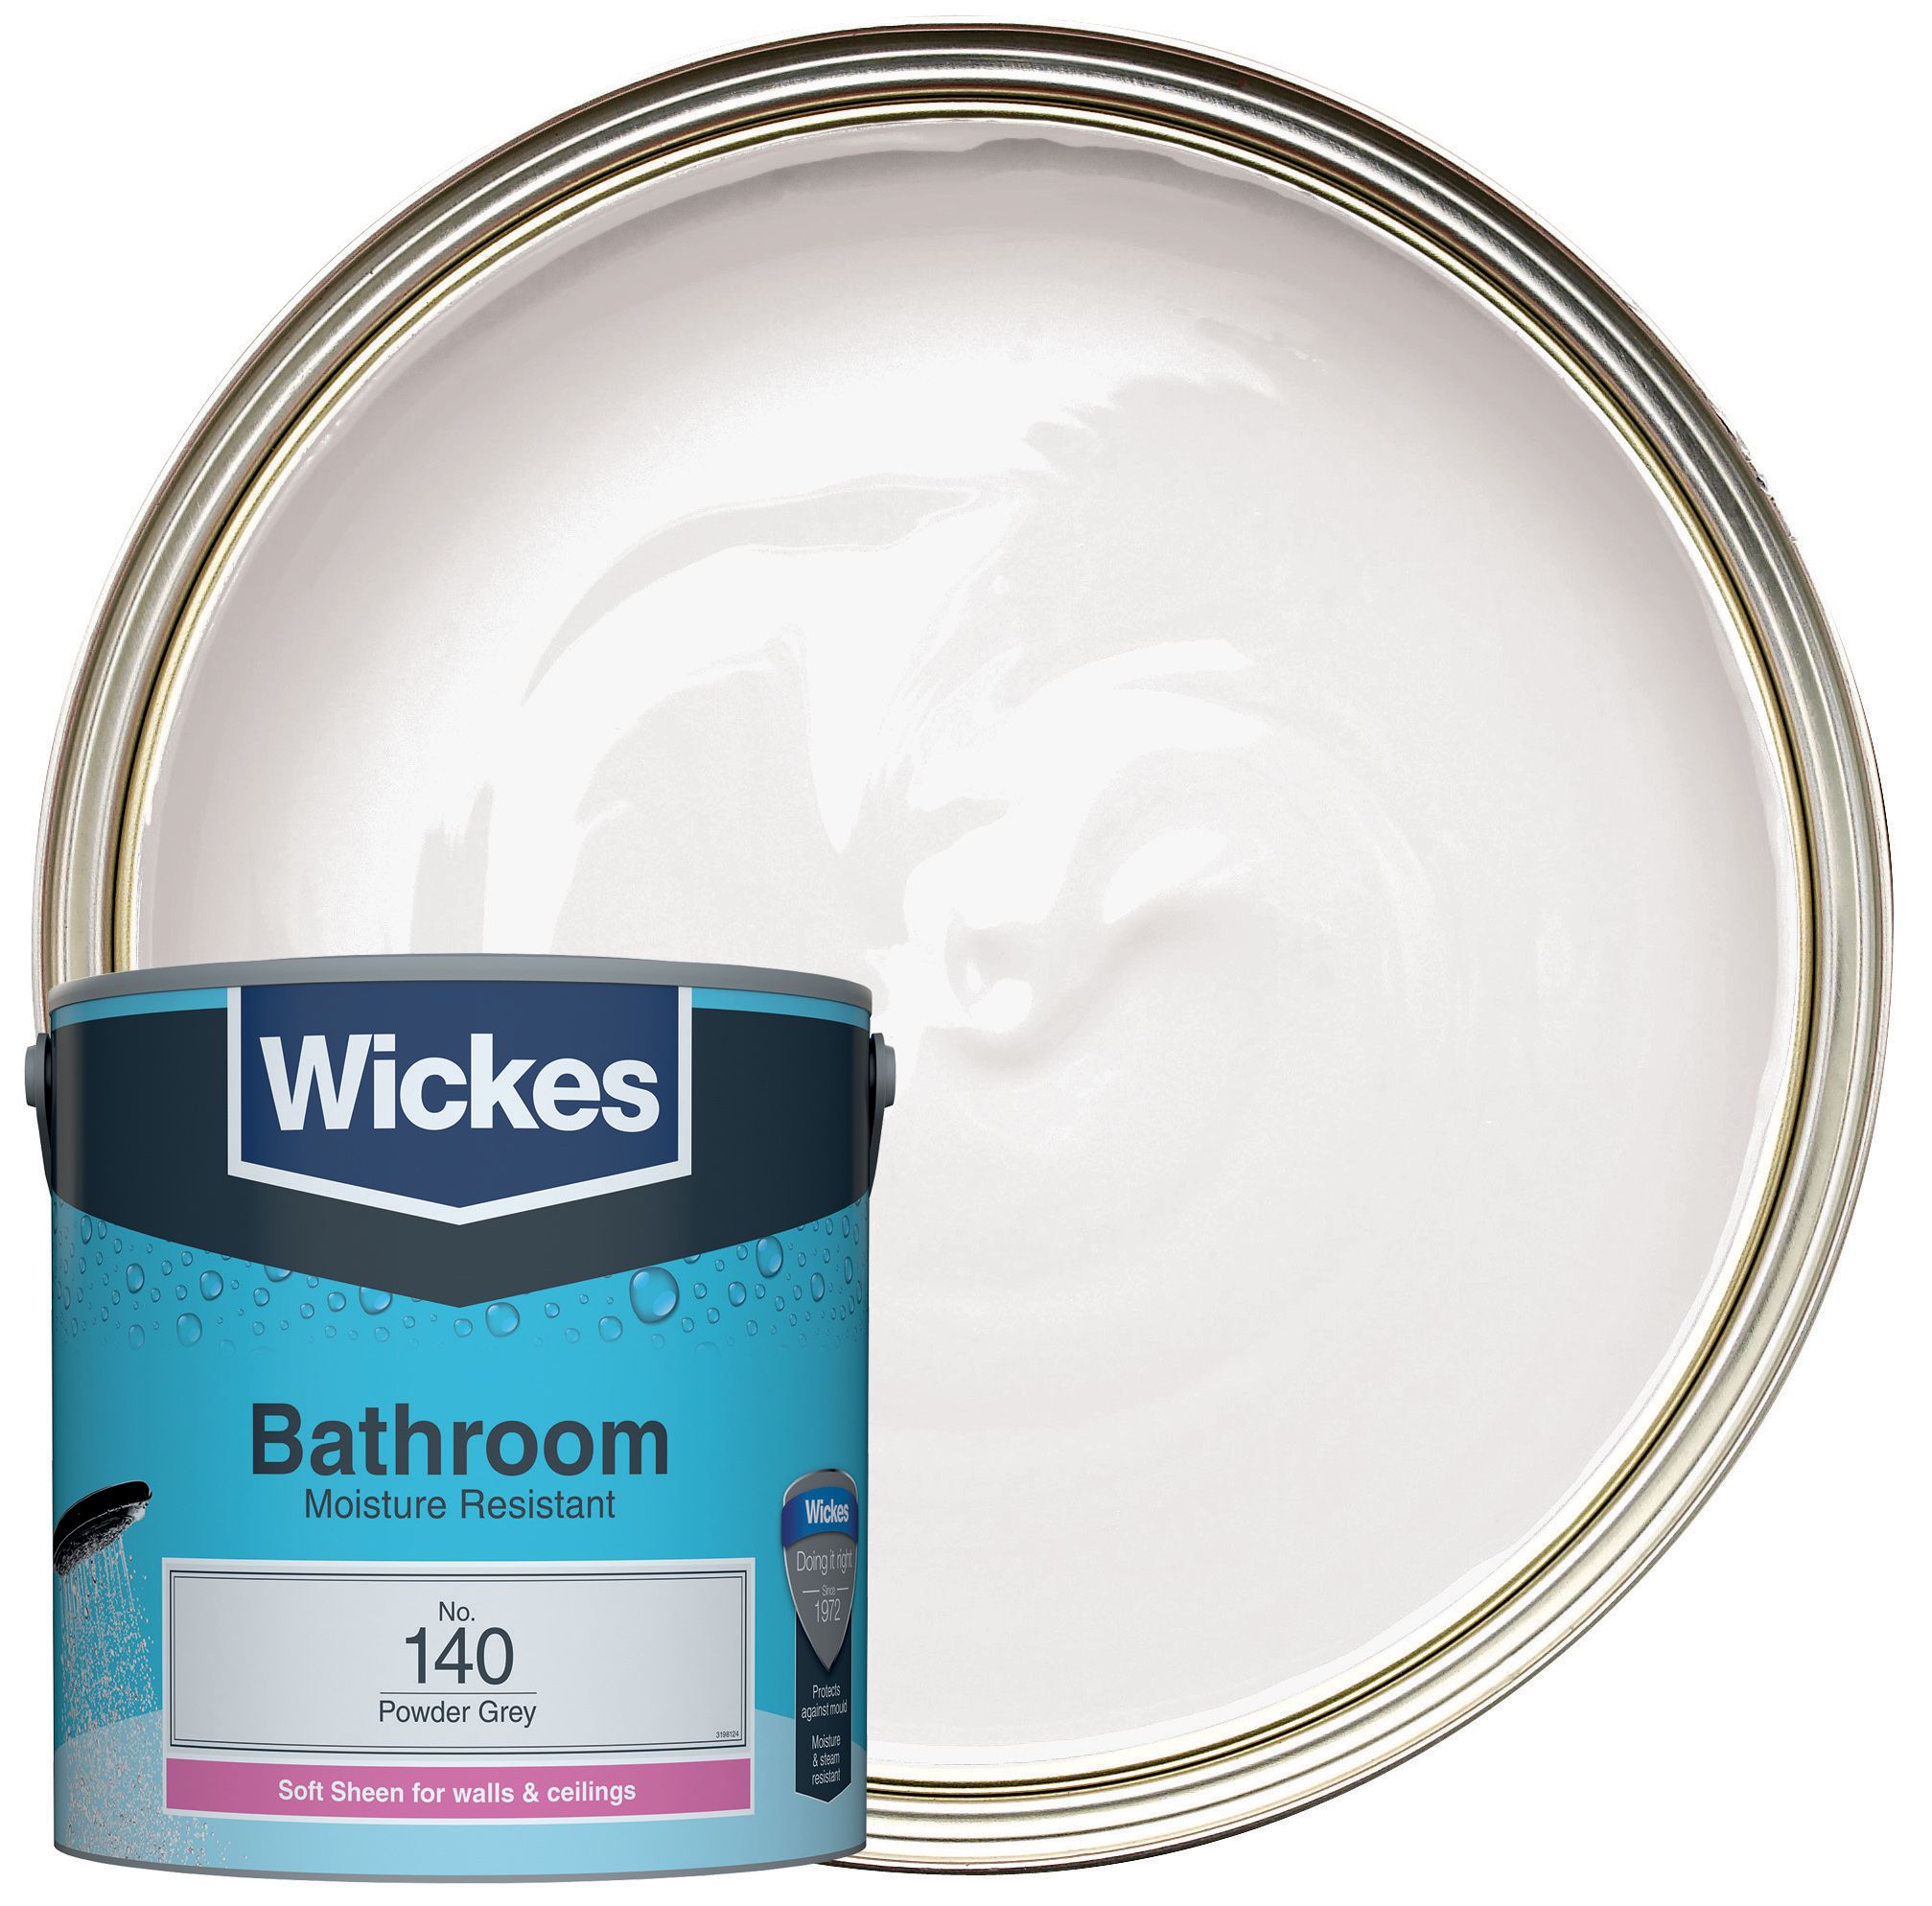 Wickes Bathroom Soft Sheen Emulsion Paint - Powder Grey No.140 - 2.5L